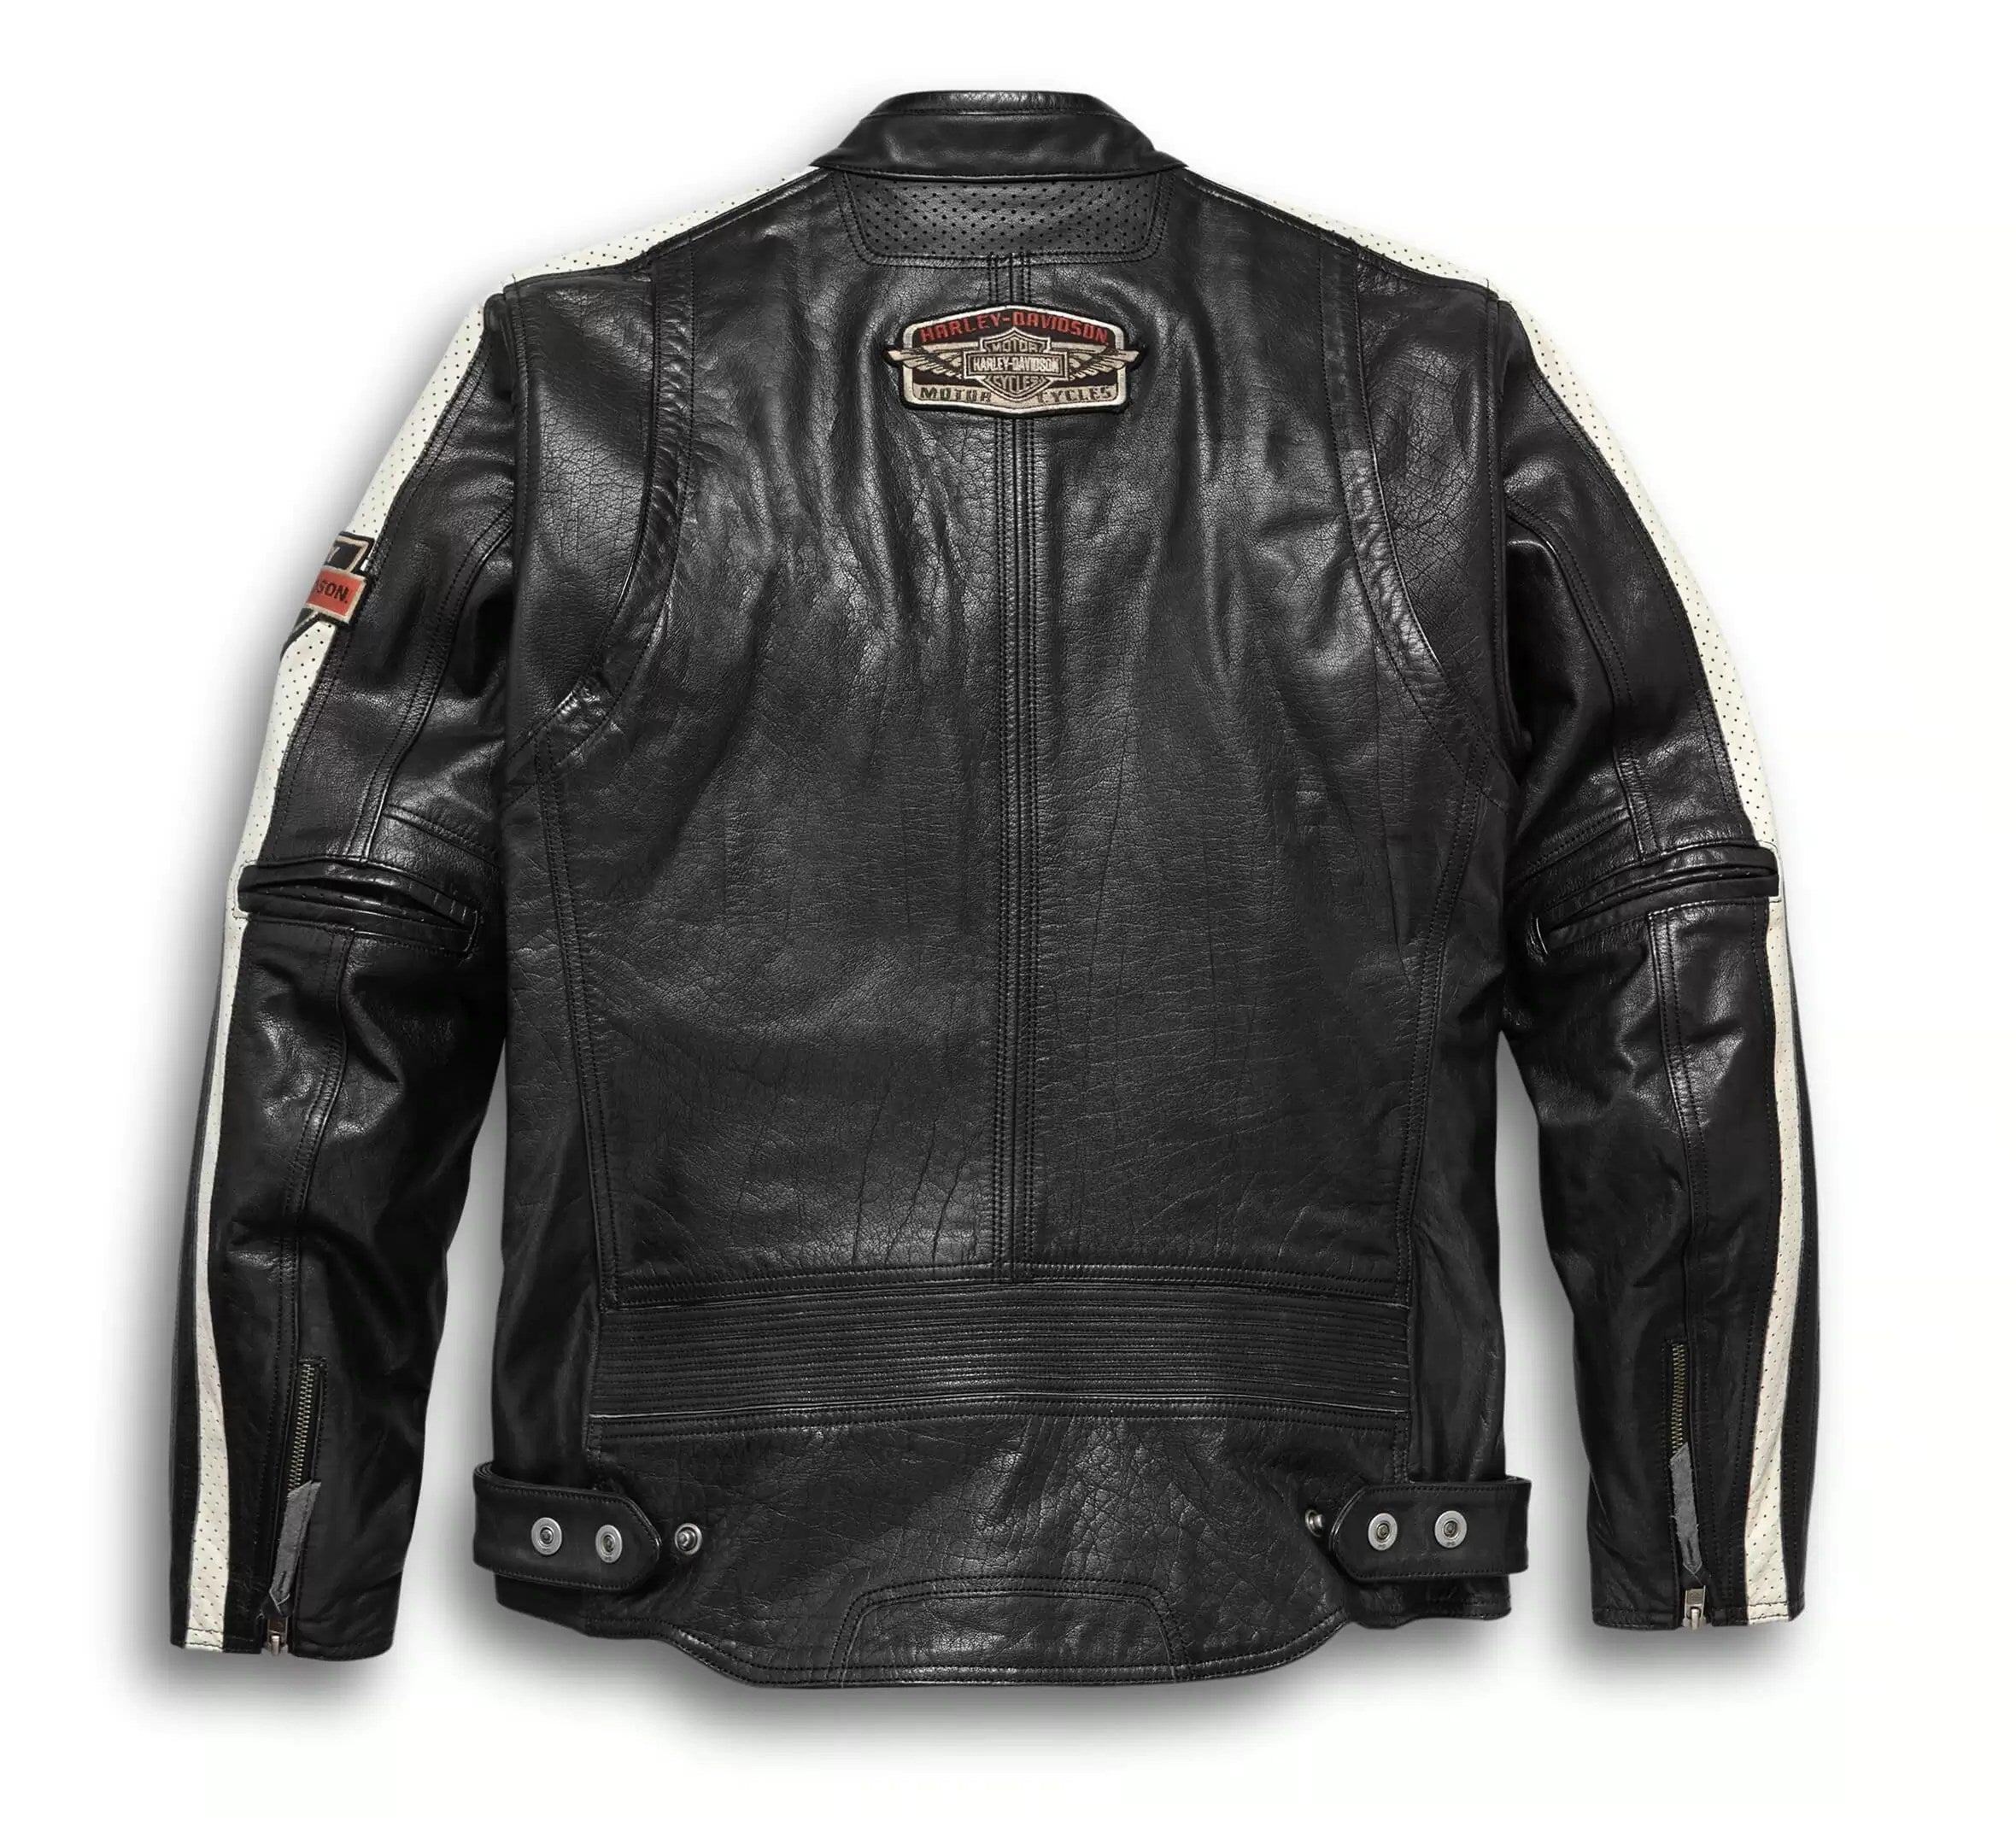 Harley Davidson Motorcycle Command Leather Jacket